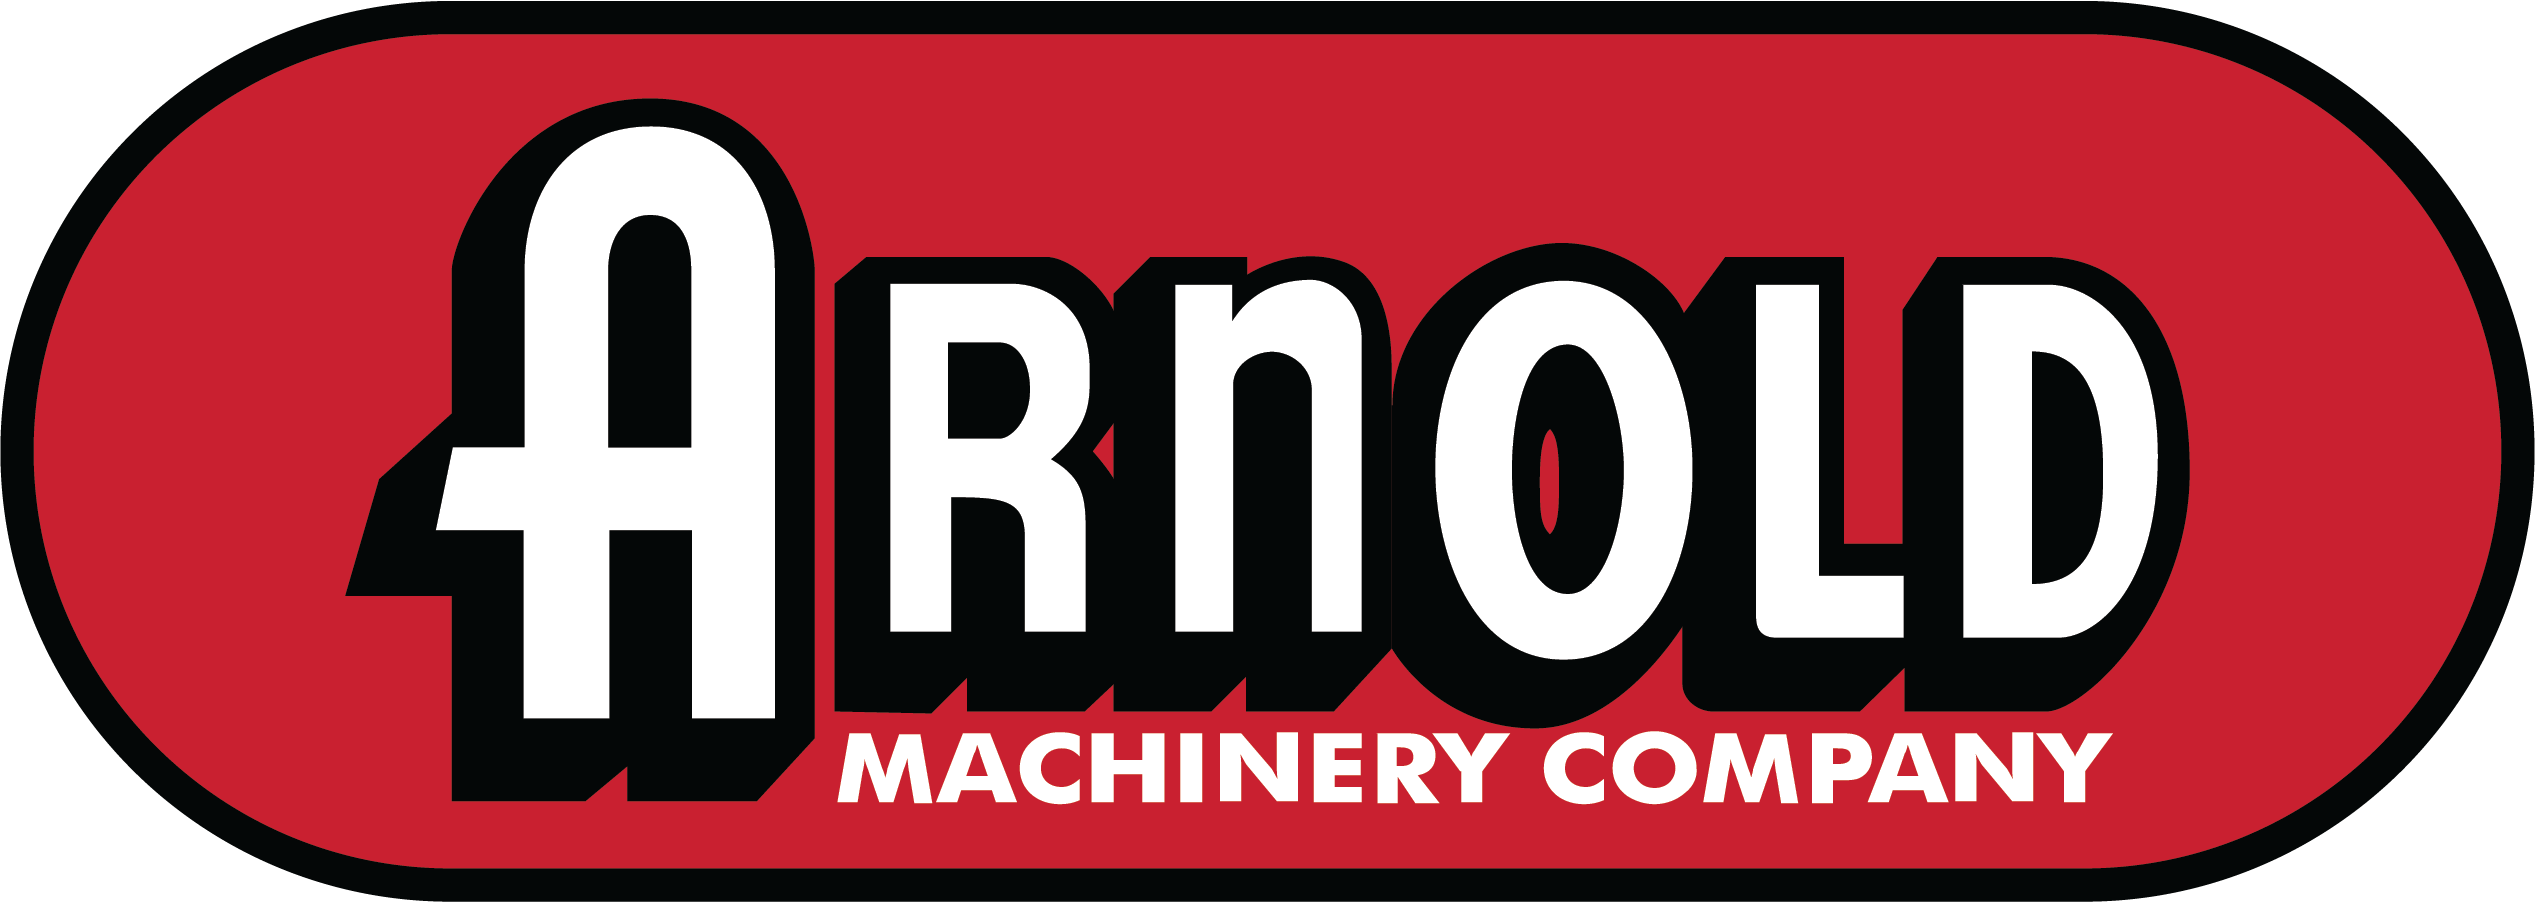 Arnold Machinery Company logo